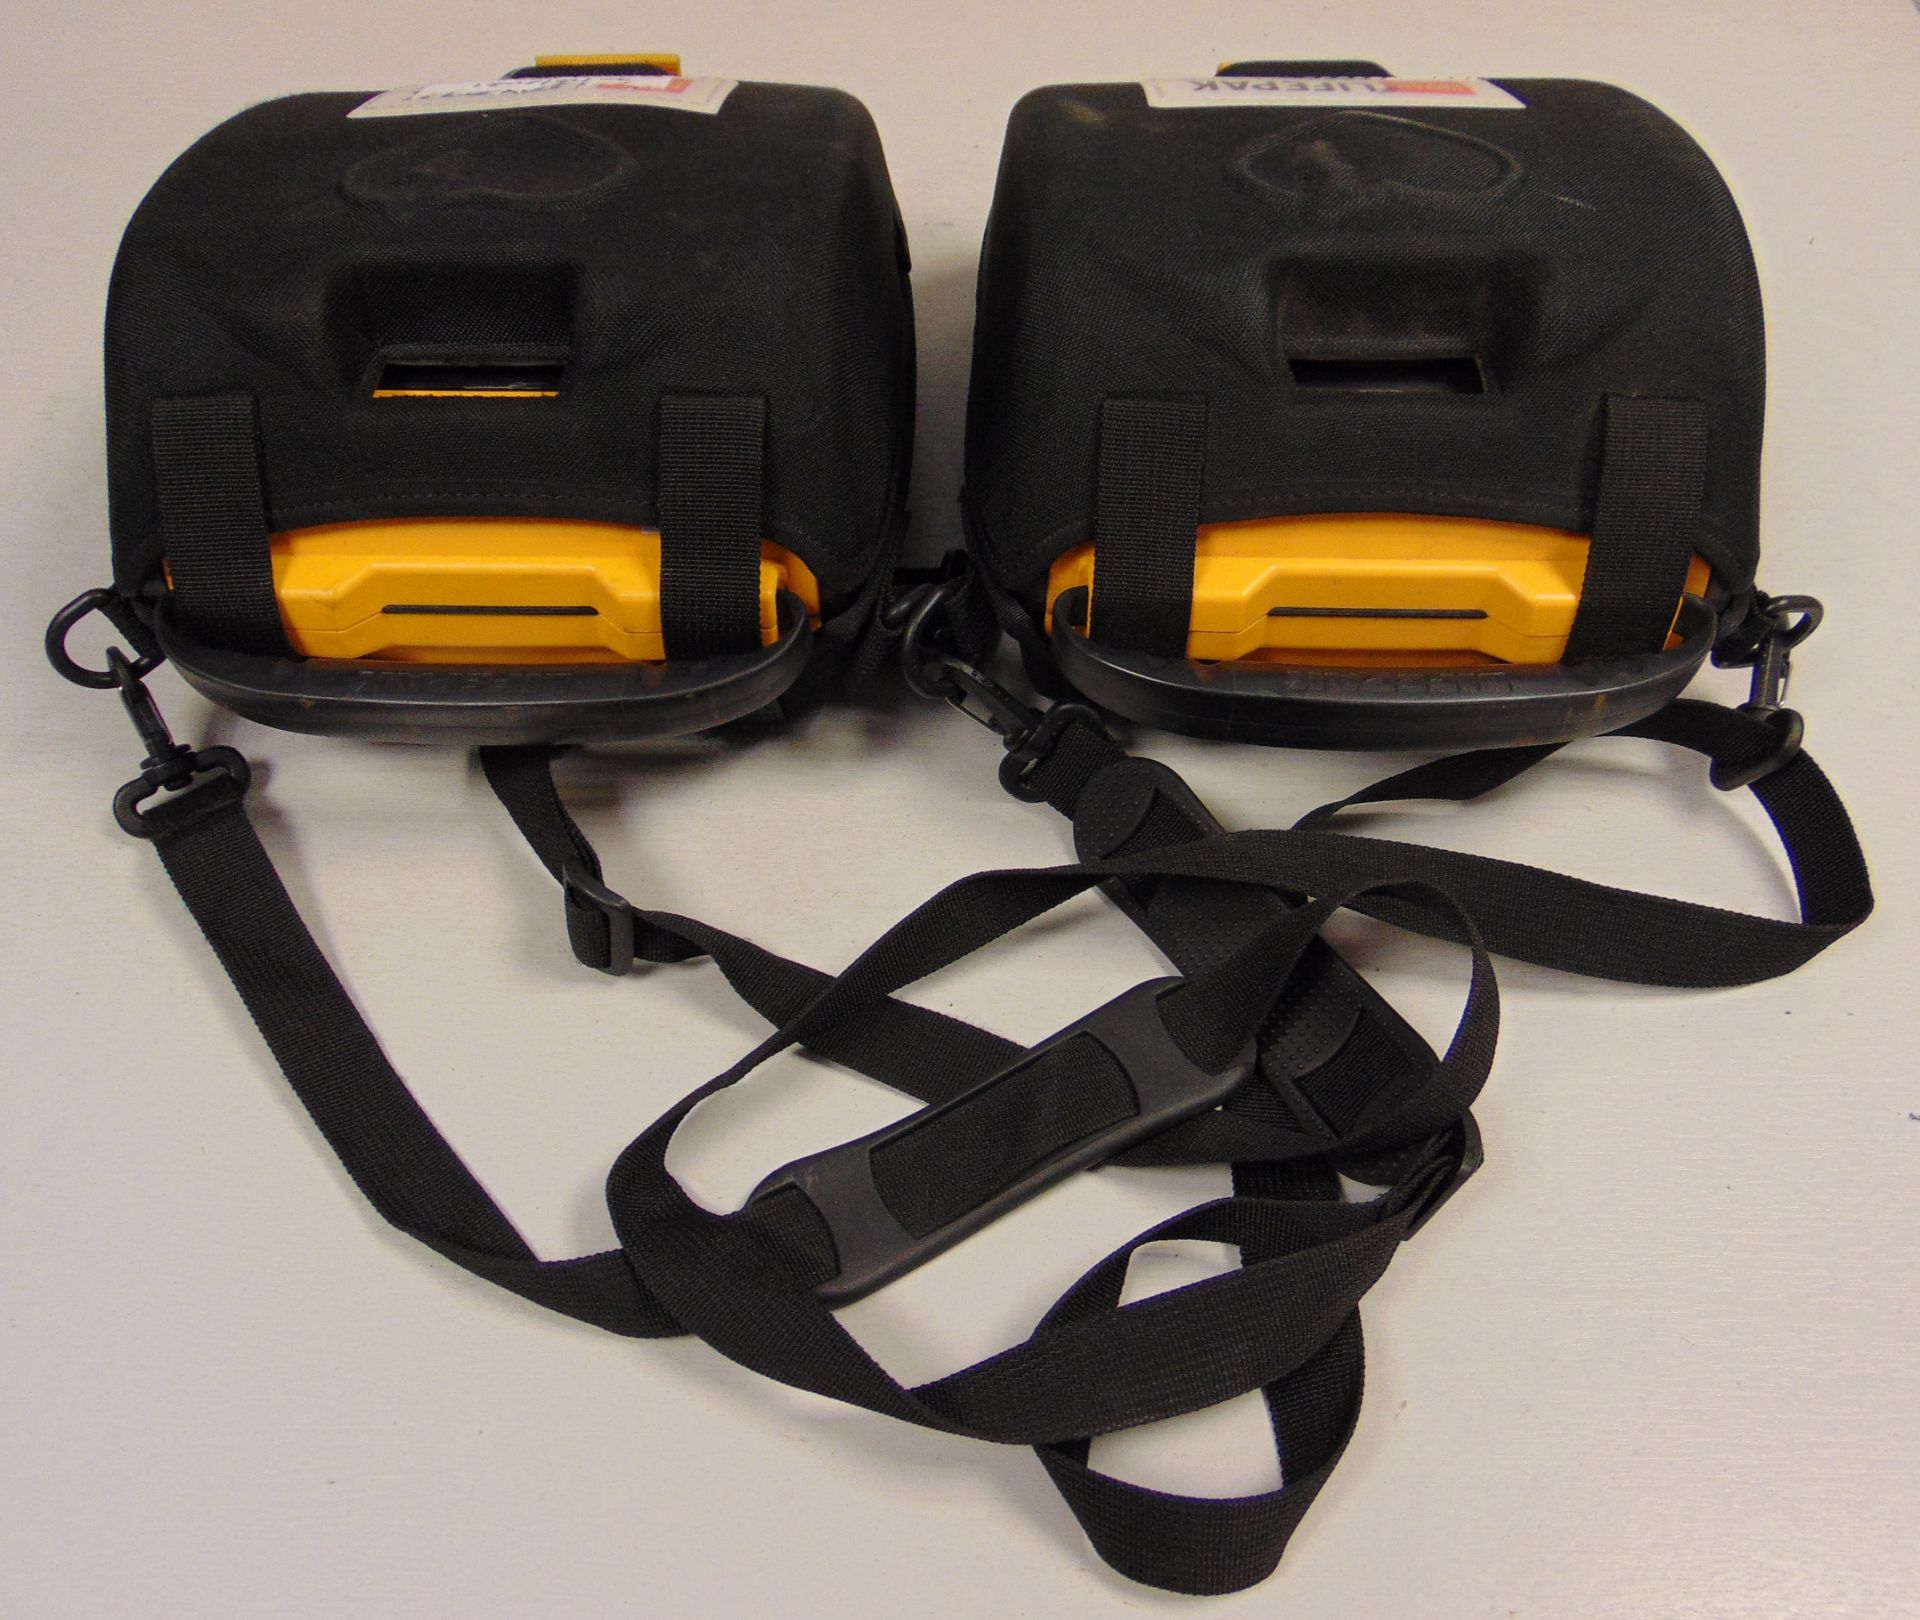 2 x Physio-Control Lifepak CR Plus Defibrillator Units - Fully Automatic - Image 4 of 4